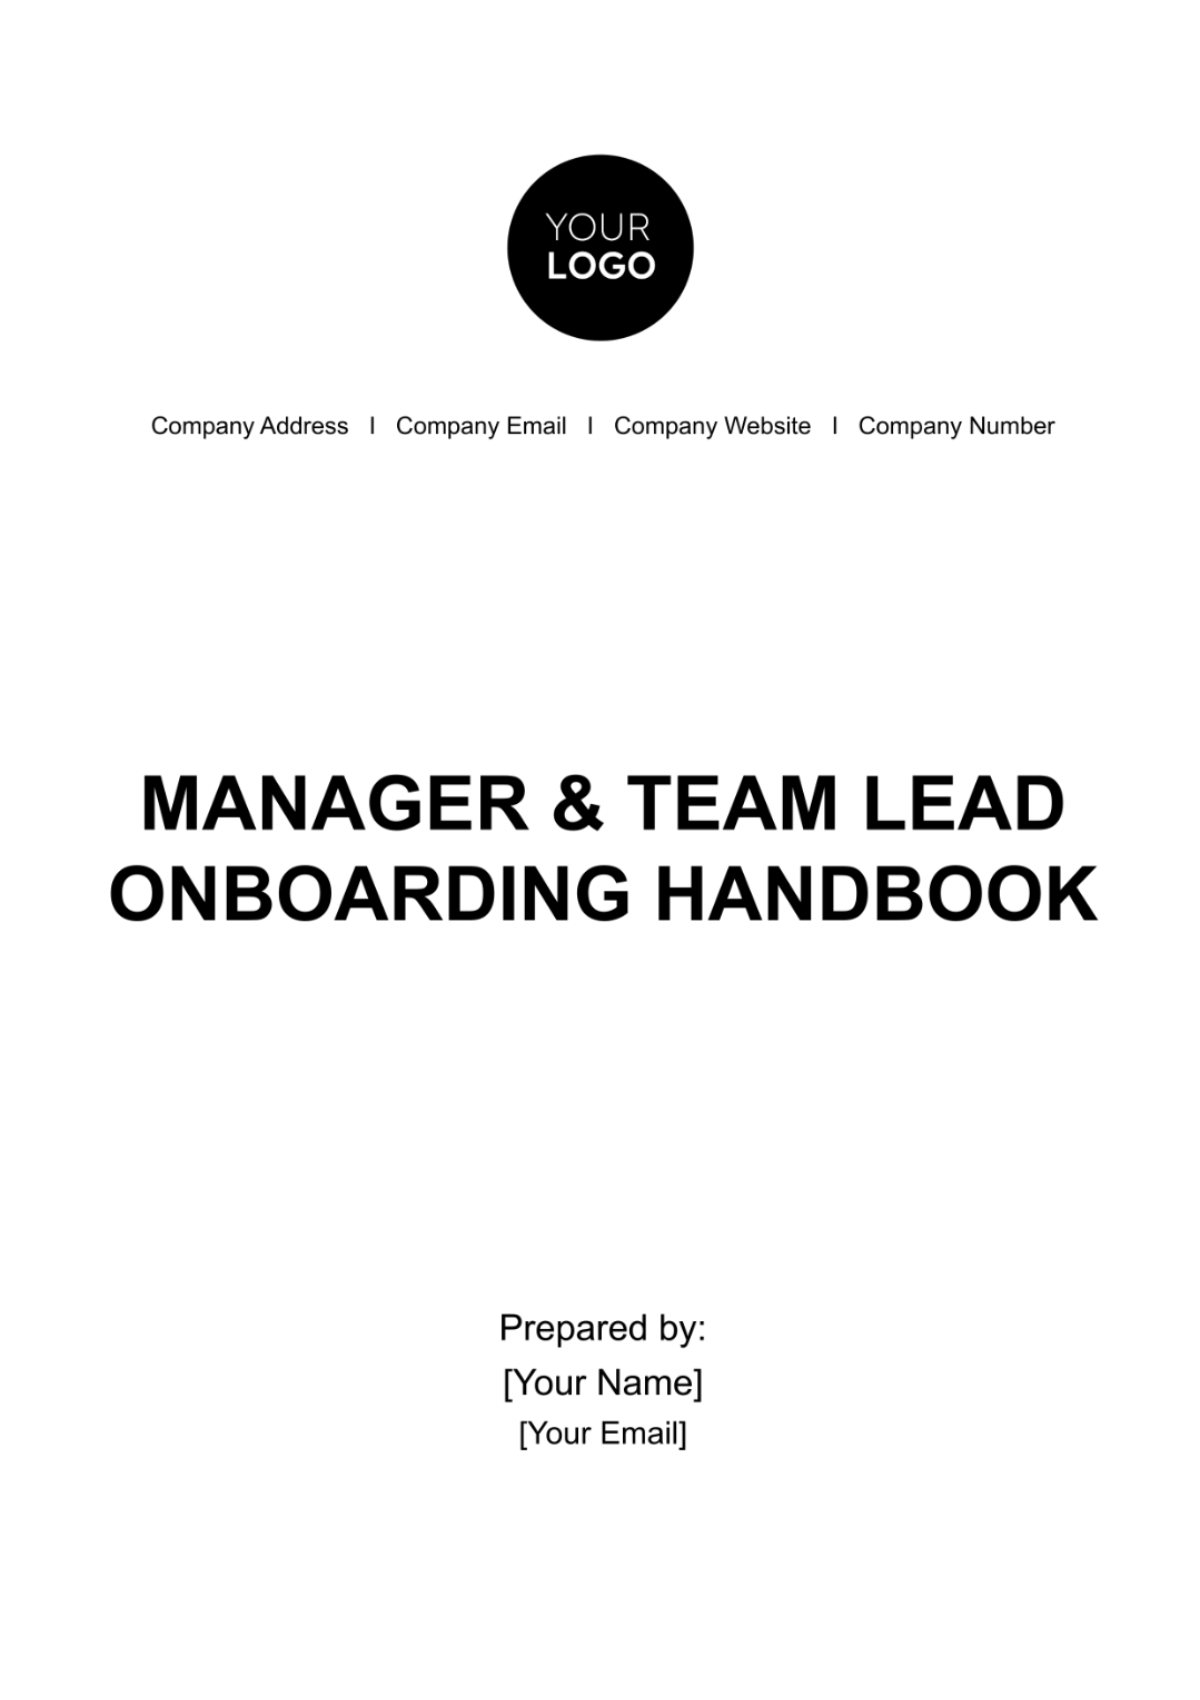 Free Manager & Team Lead Onboarding Handbook HR Template